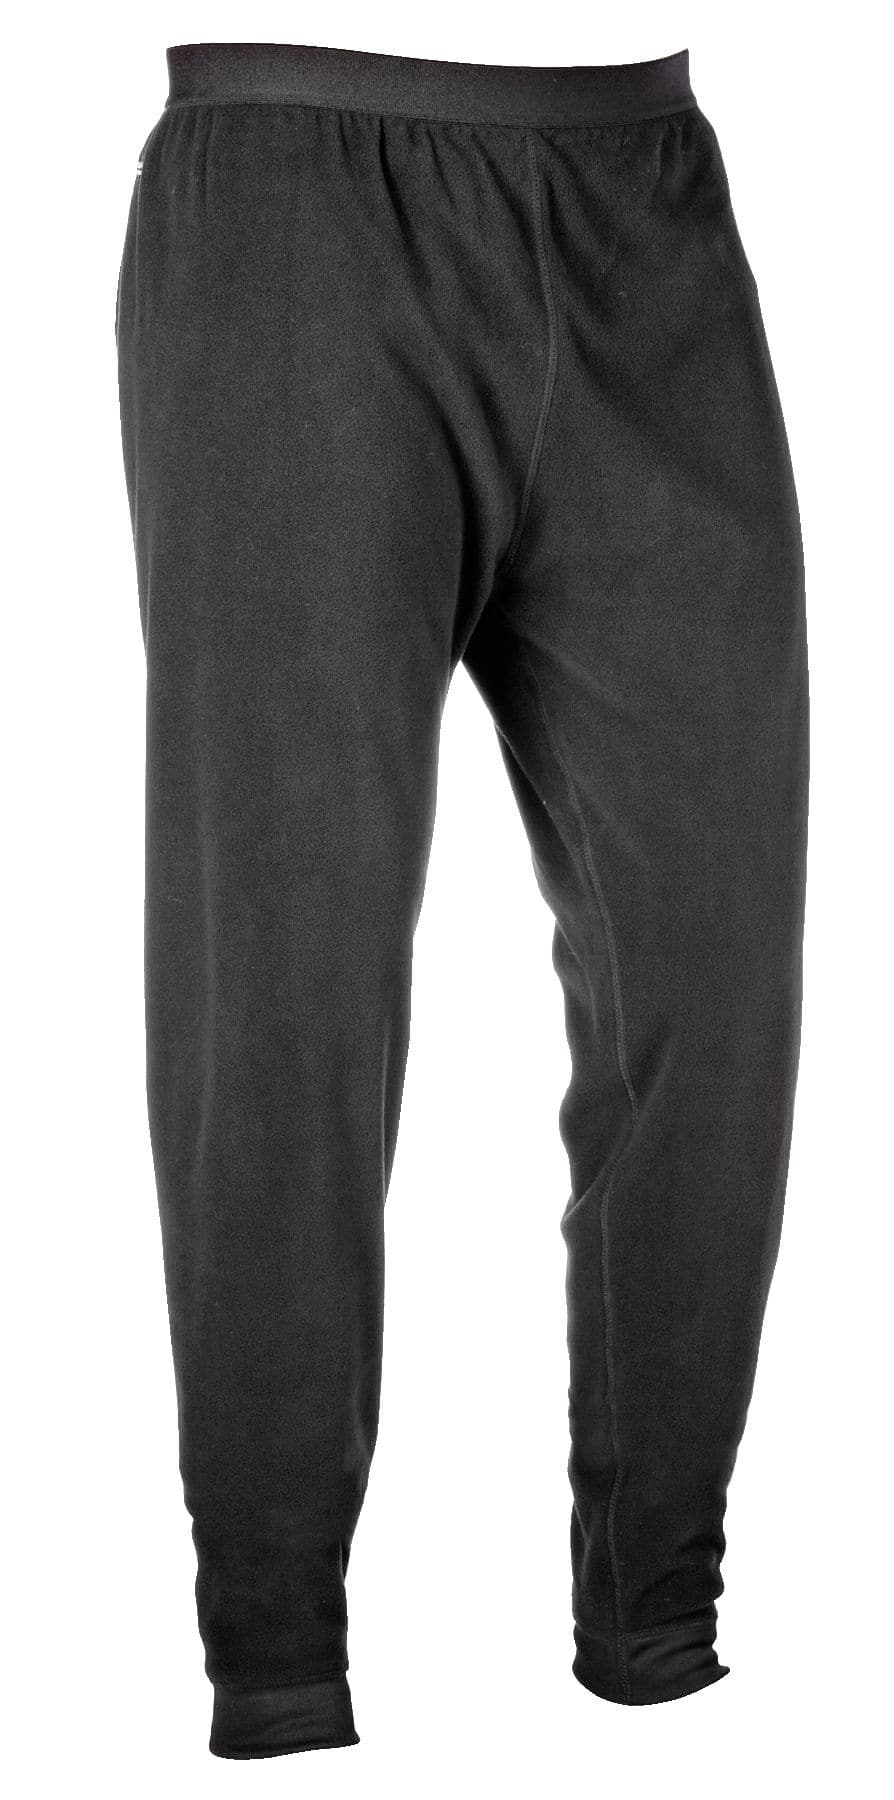 Men's Thermal Underwear Pants Premium Long Fleece Lined Base